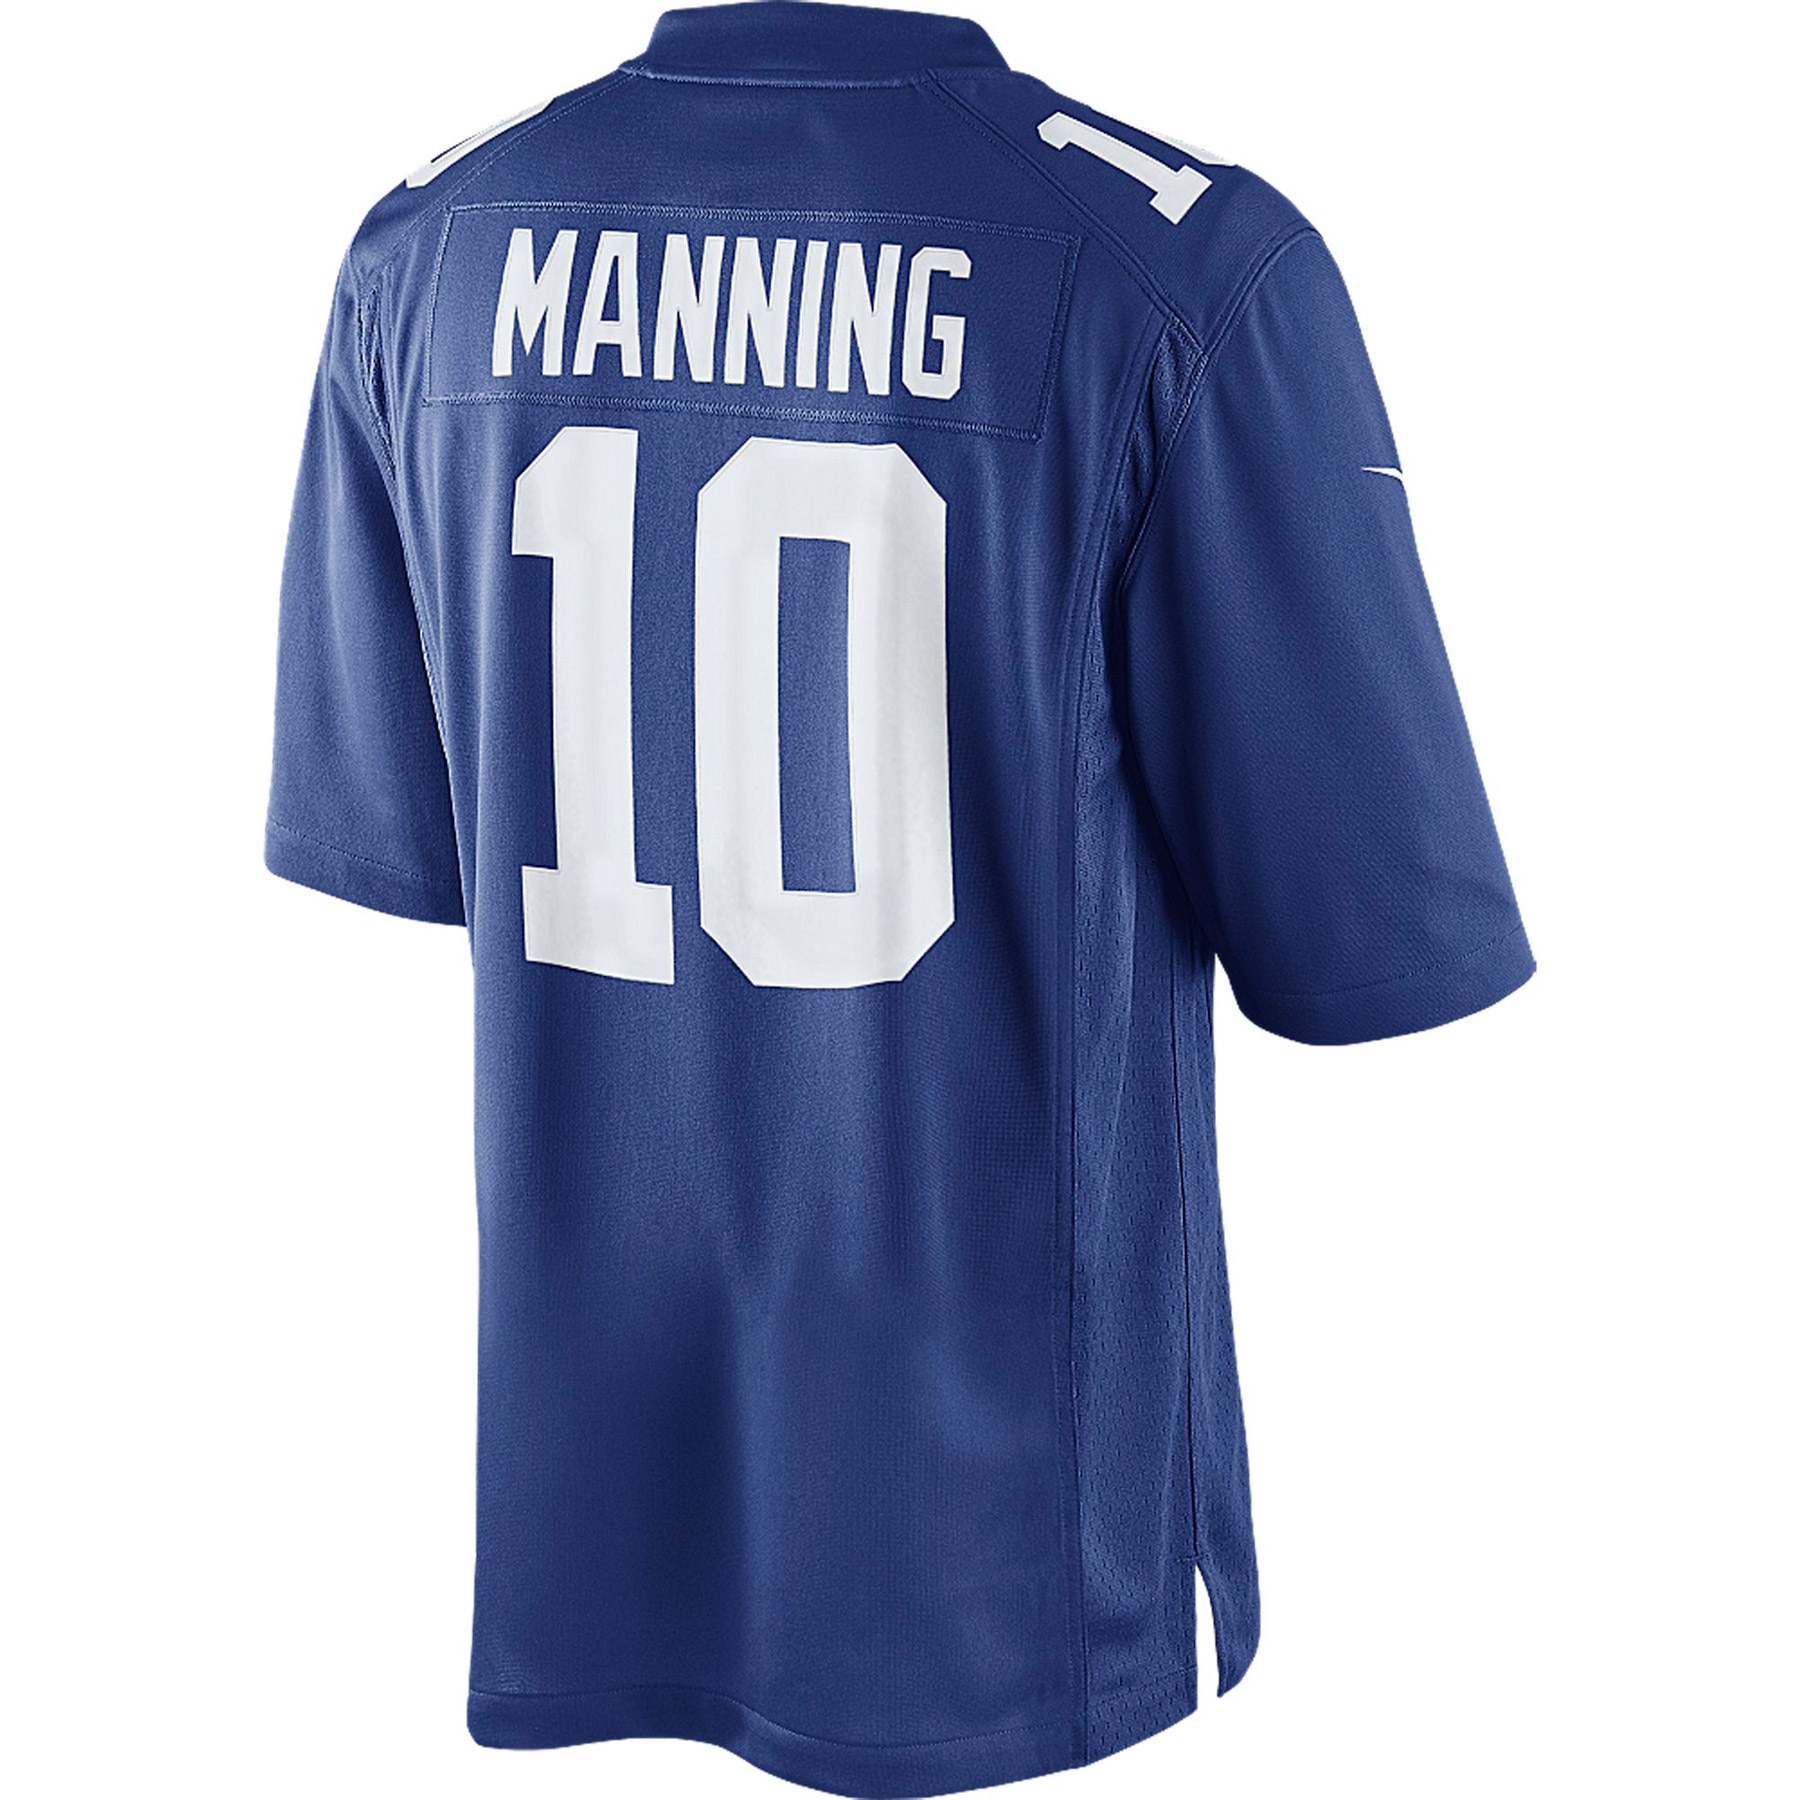 buy eli manning jersey